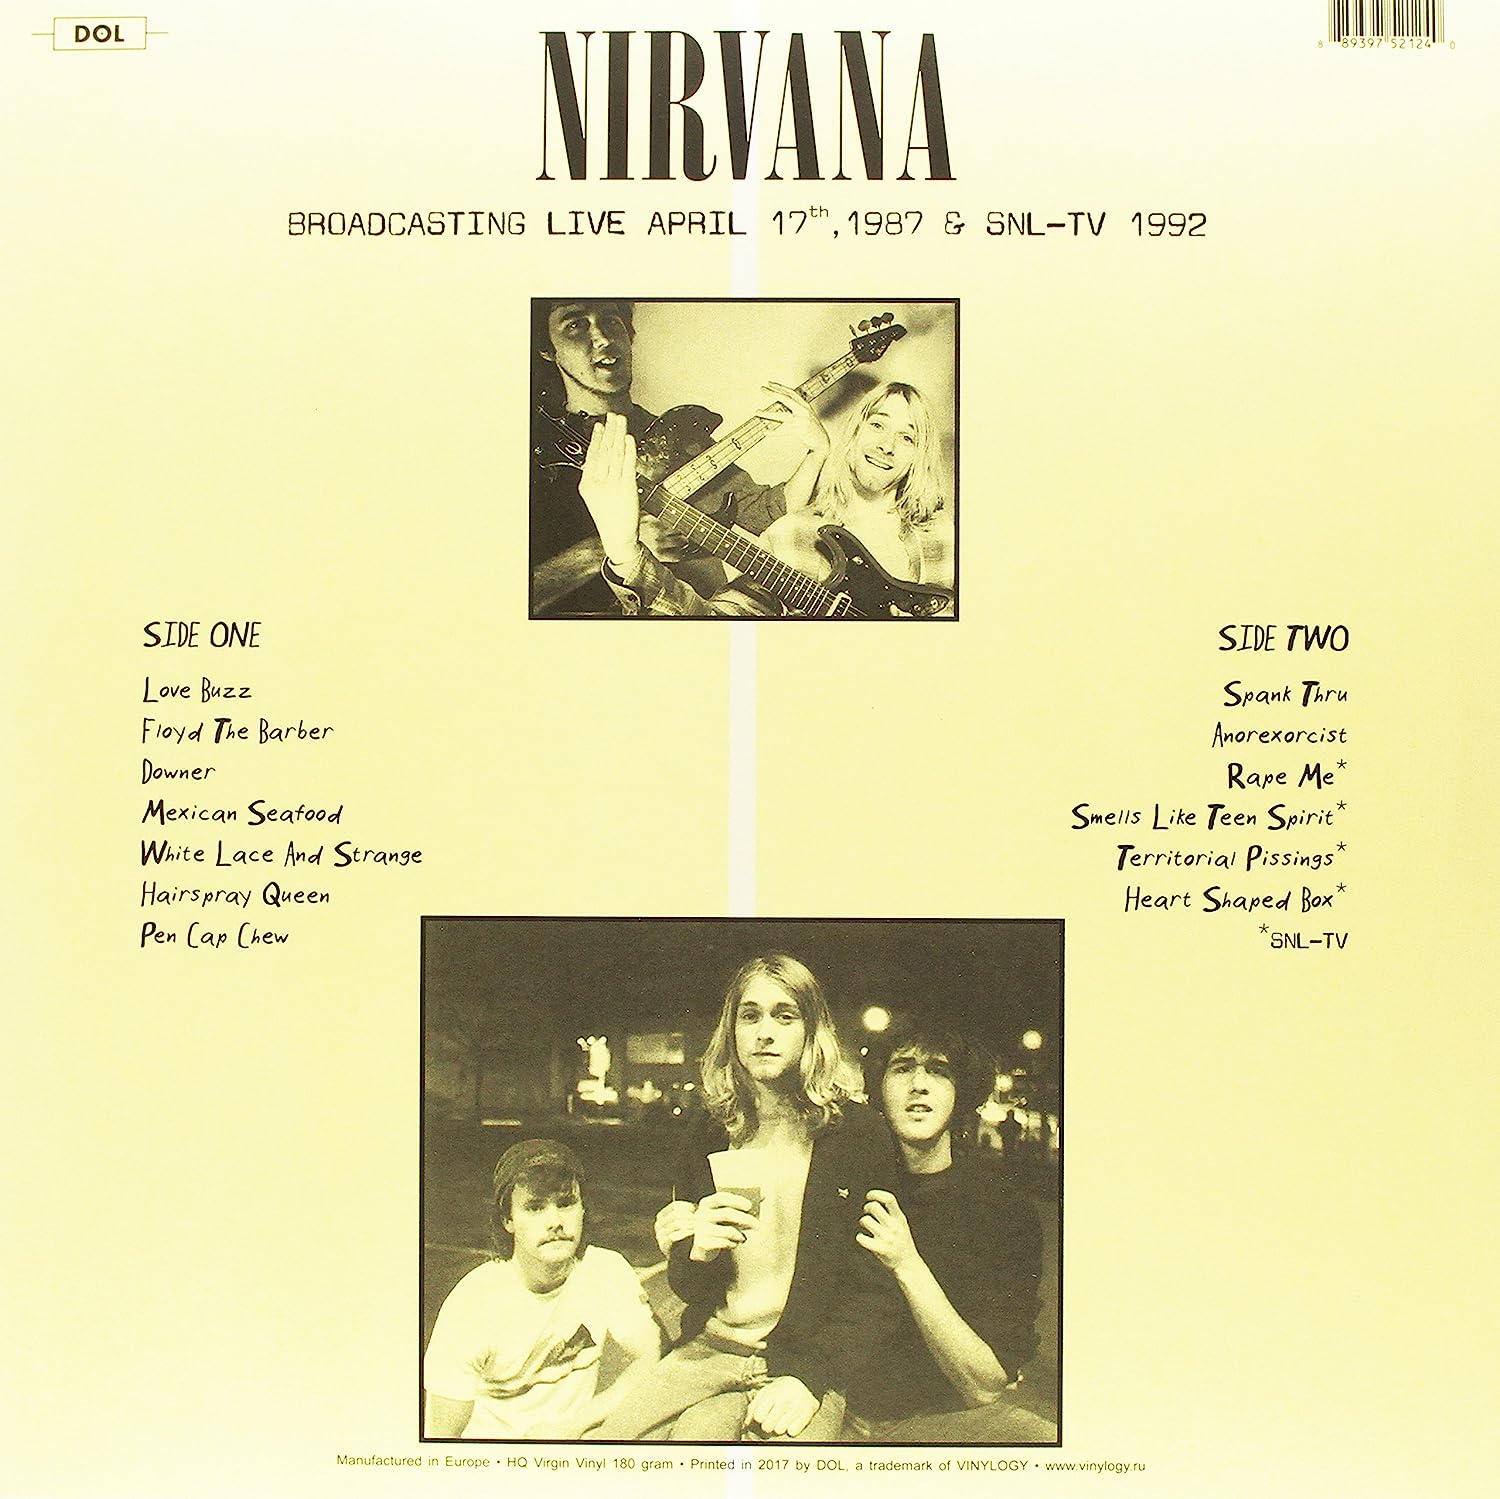 Nirvana Broadcasting Live - Ireland Vinyl